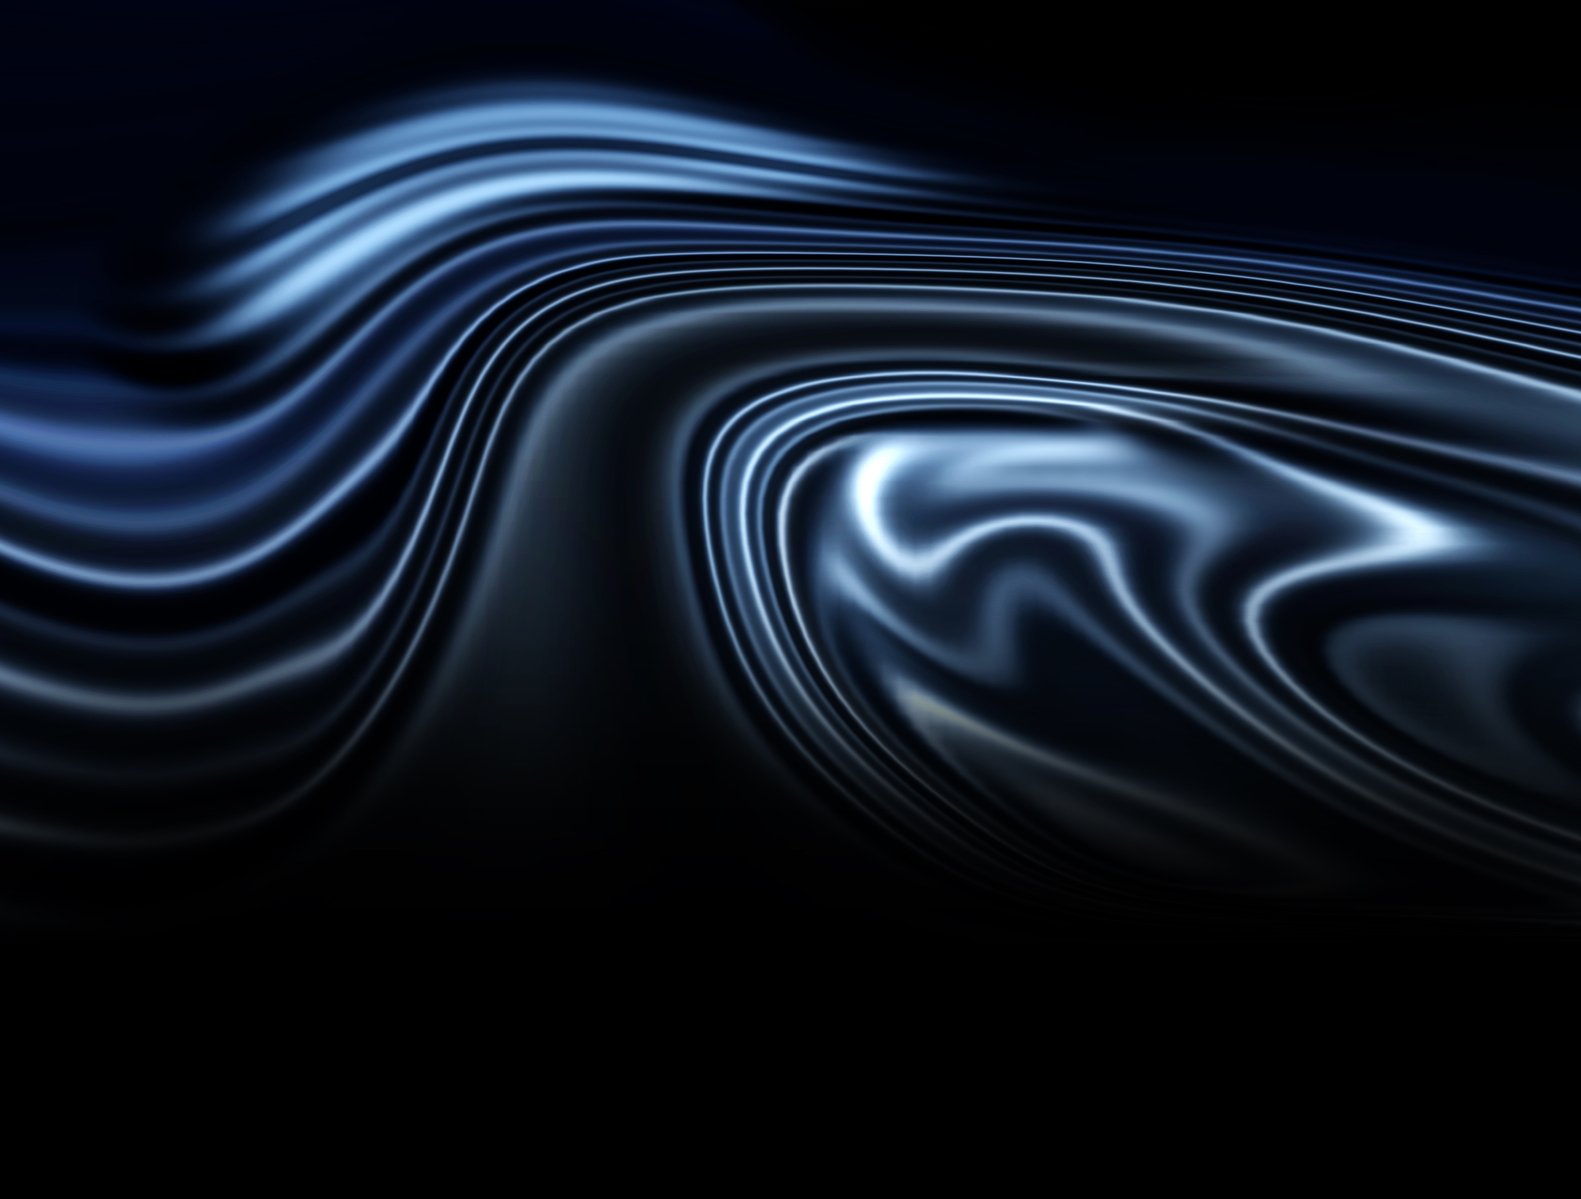 a dark background with a blue wavy design